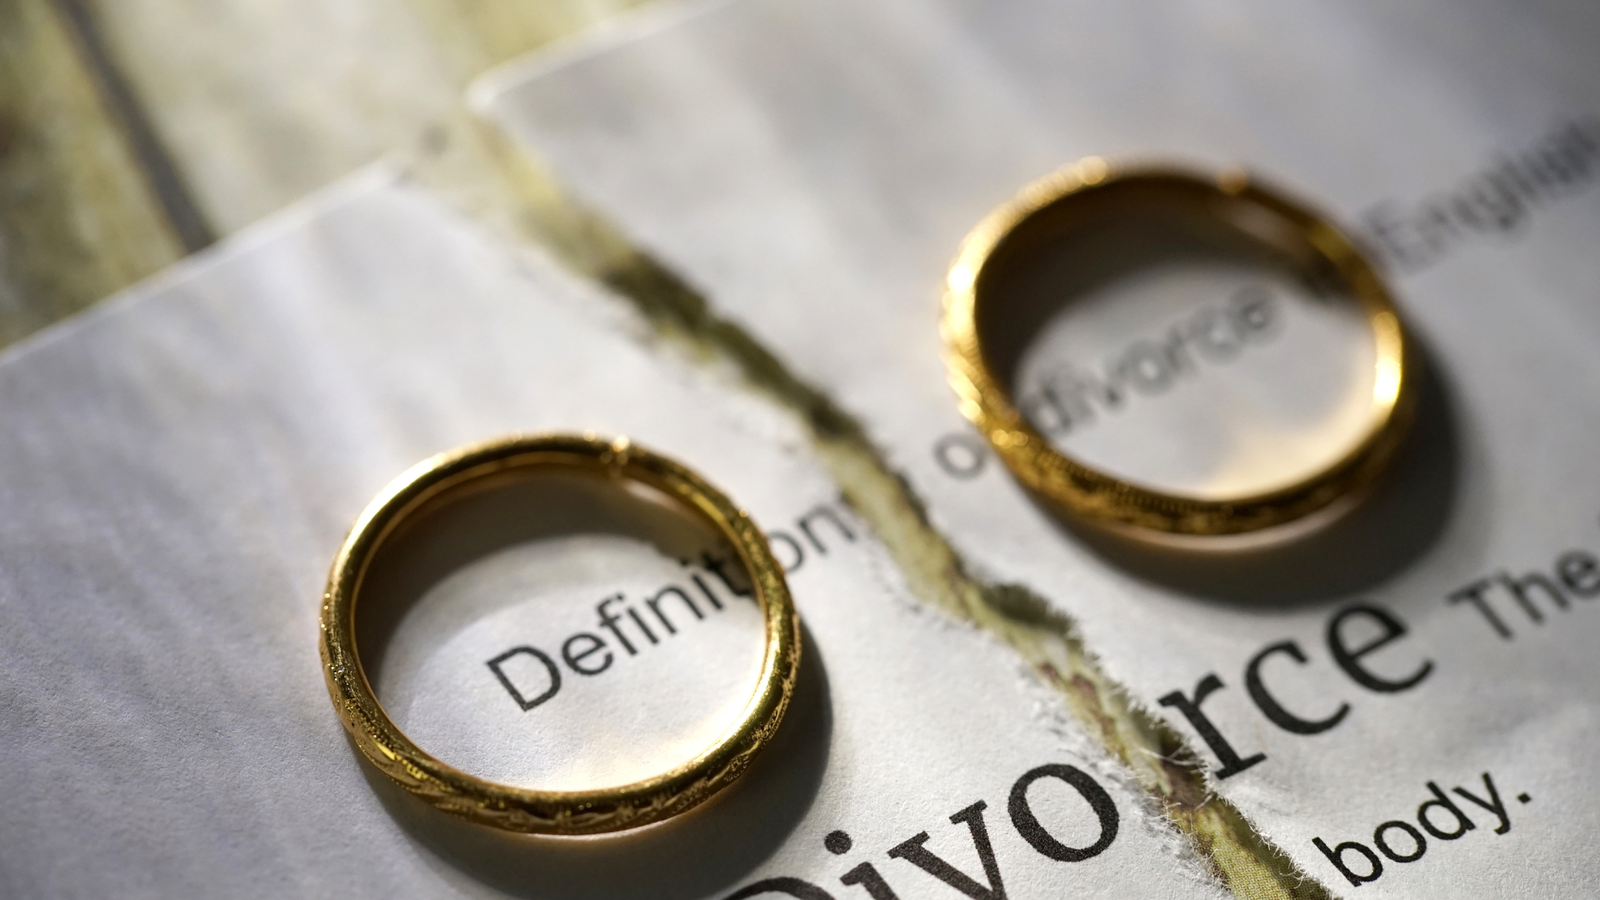 Greater LA's Premier Law Firm for High-Value Divorce